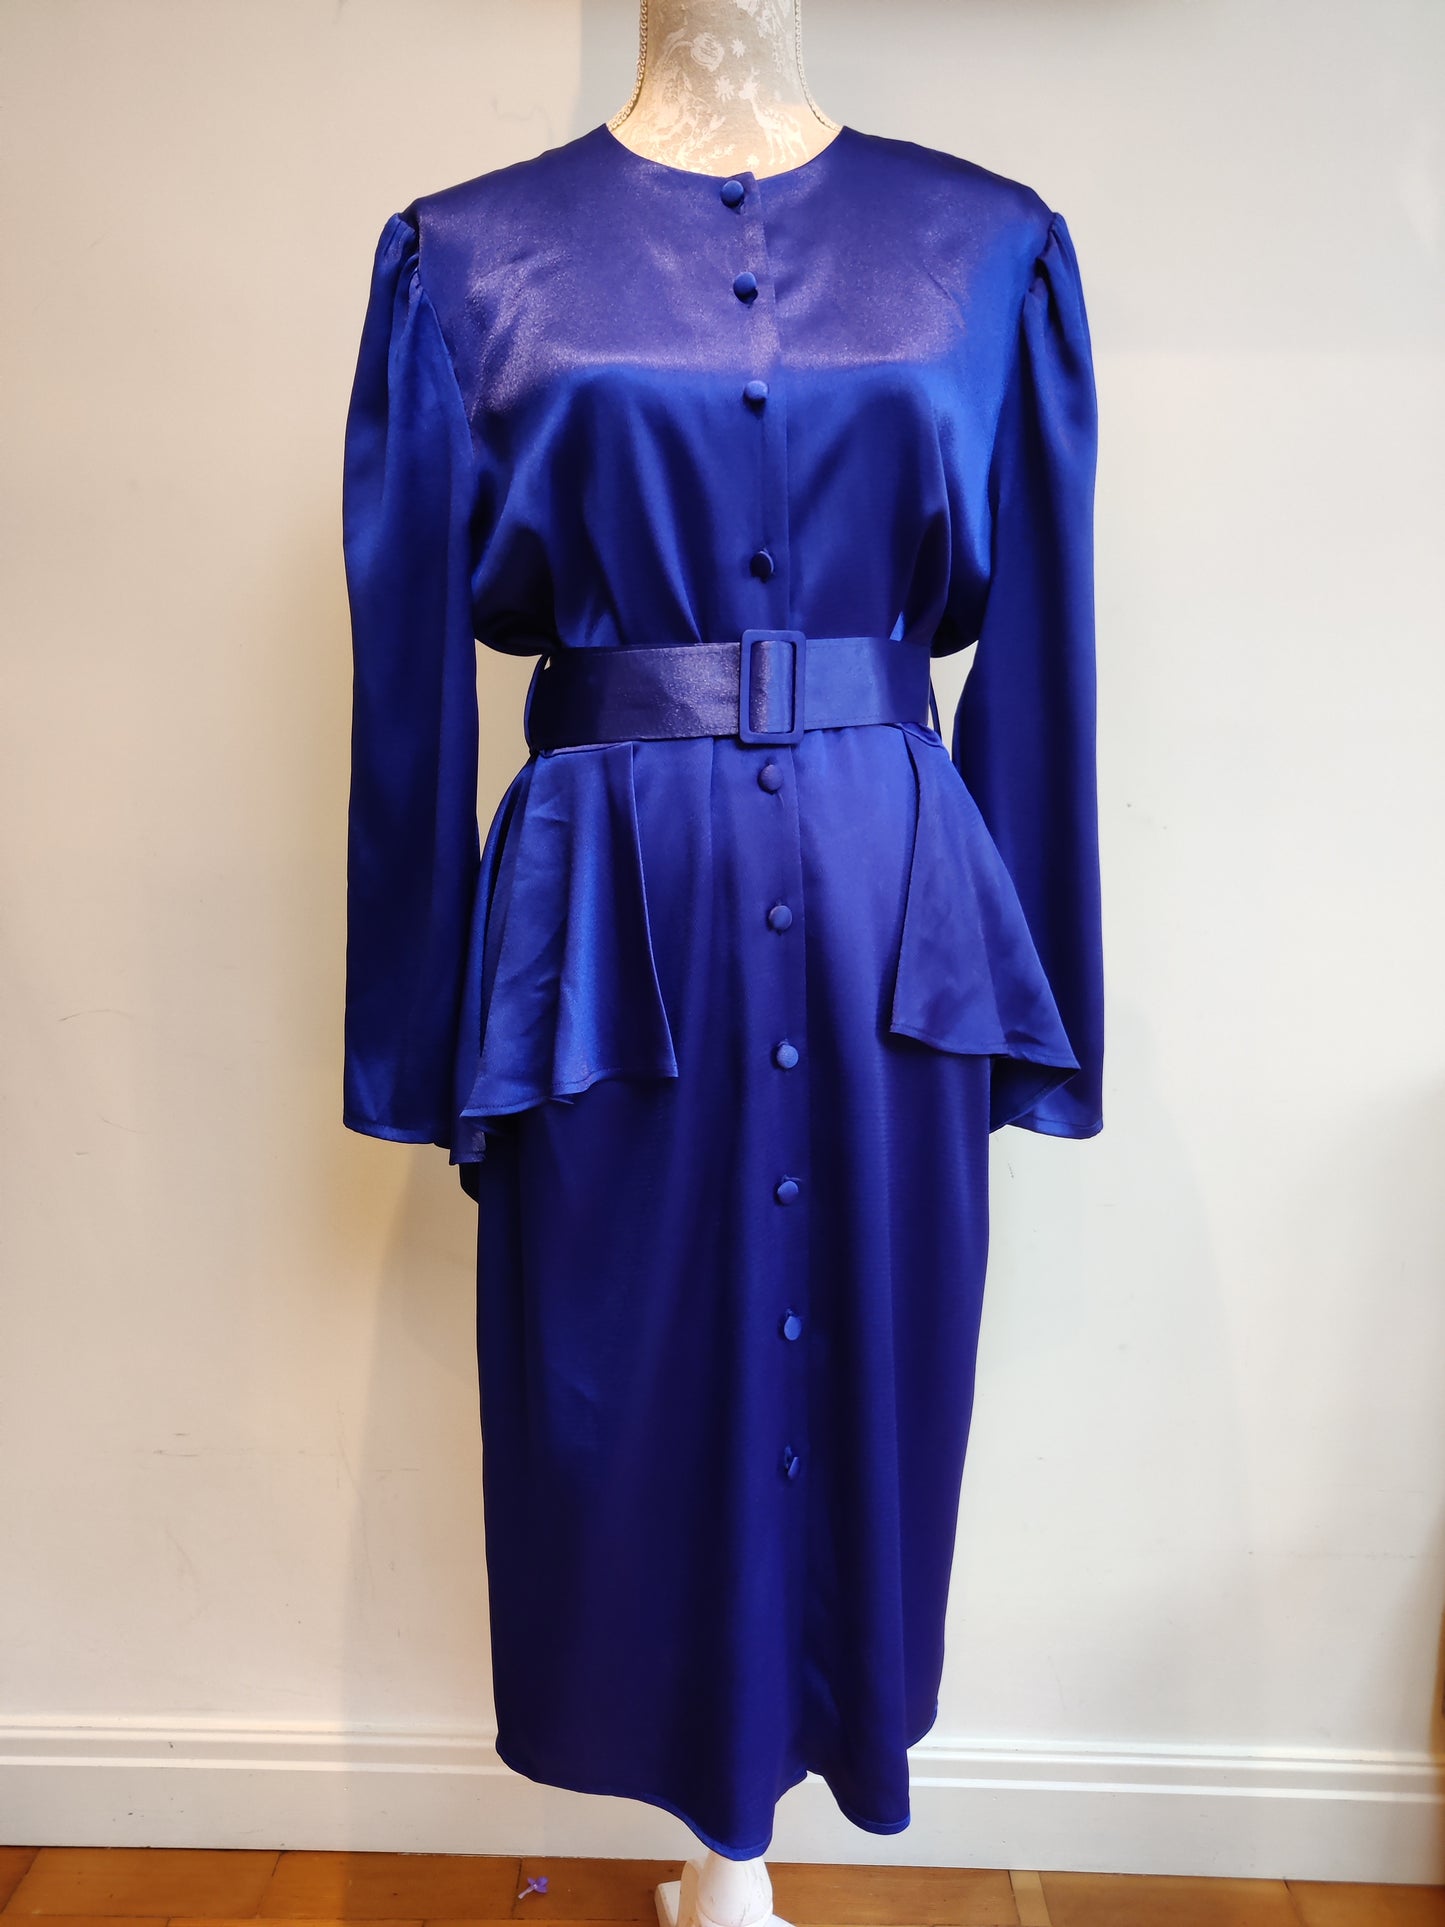 Electric blue 80's midi dress size 12.